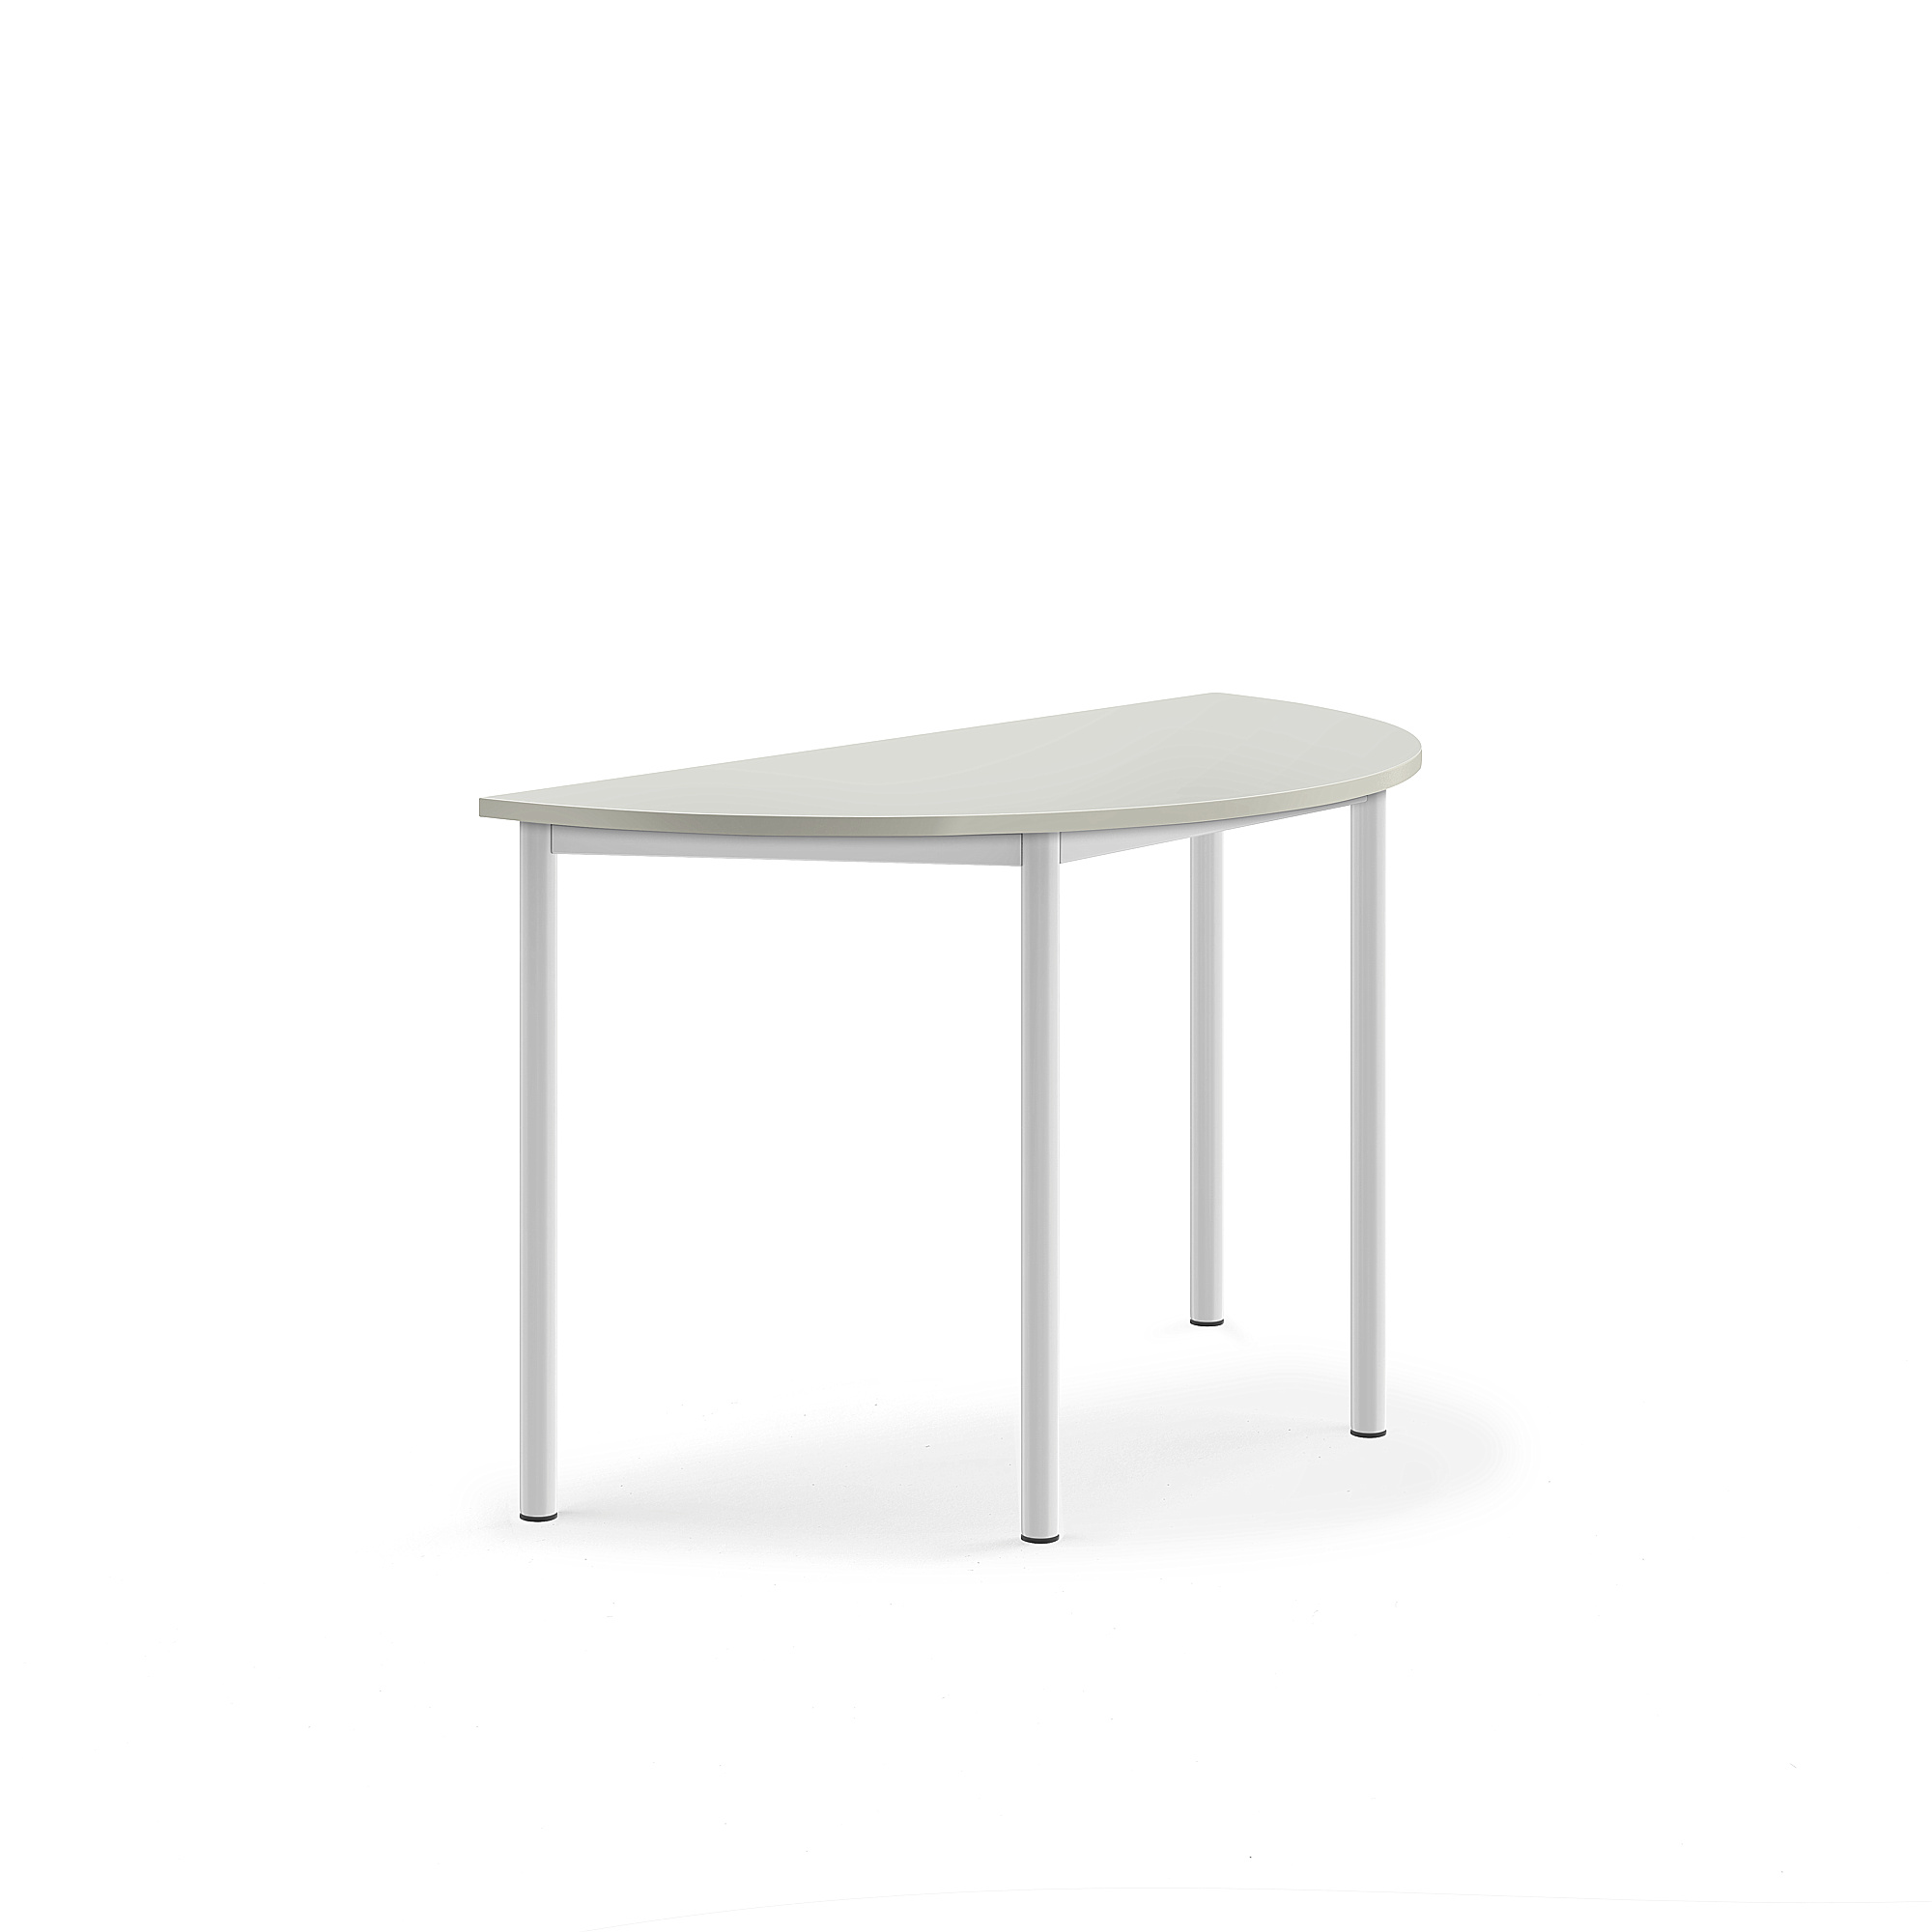 Stůl BORÅS, půlkruh, 1200x600x720 mm, bílé nohy, HPL deska, šedá